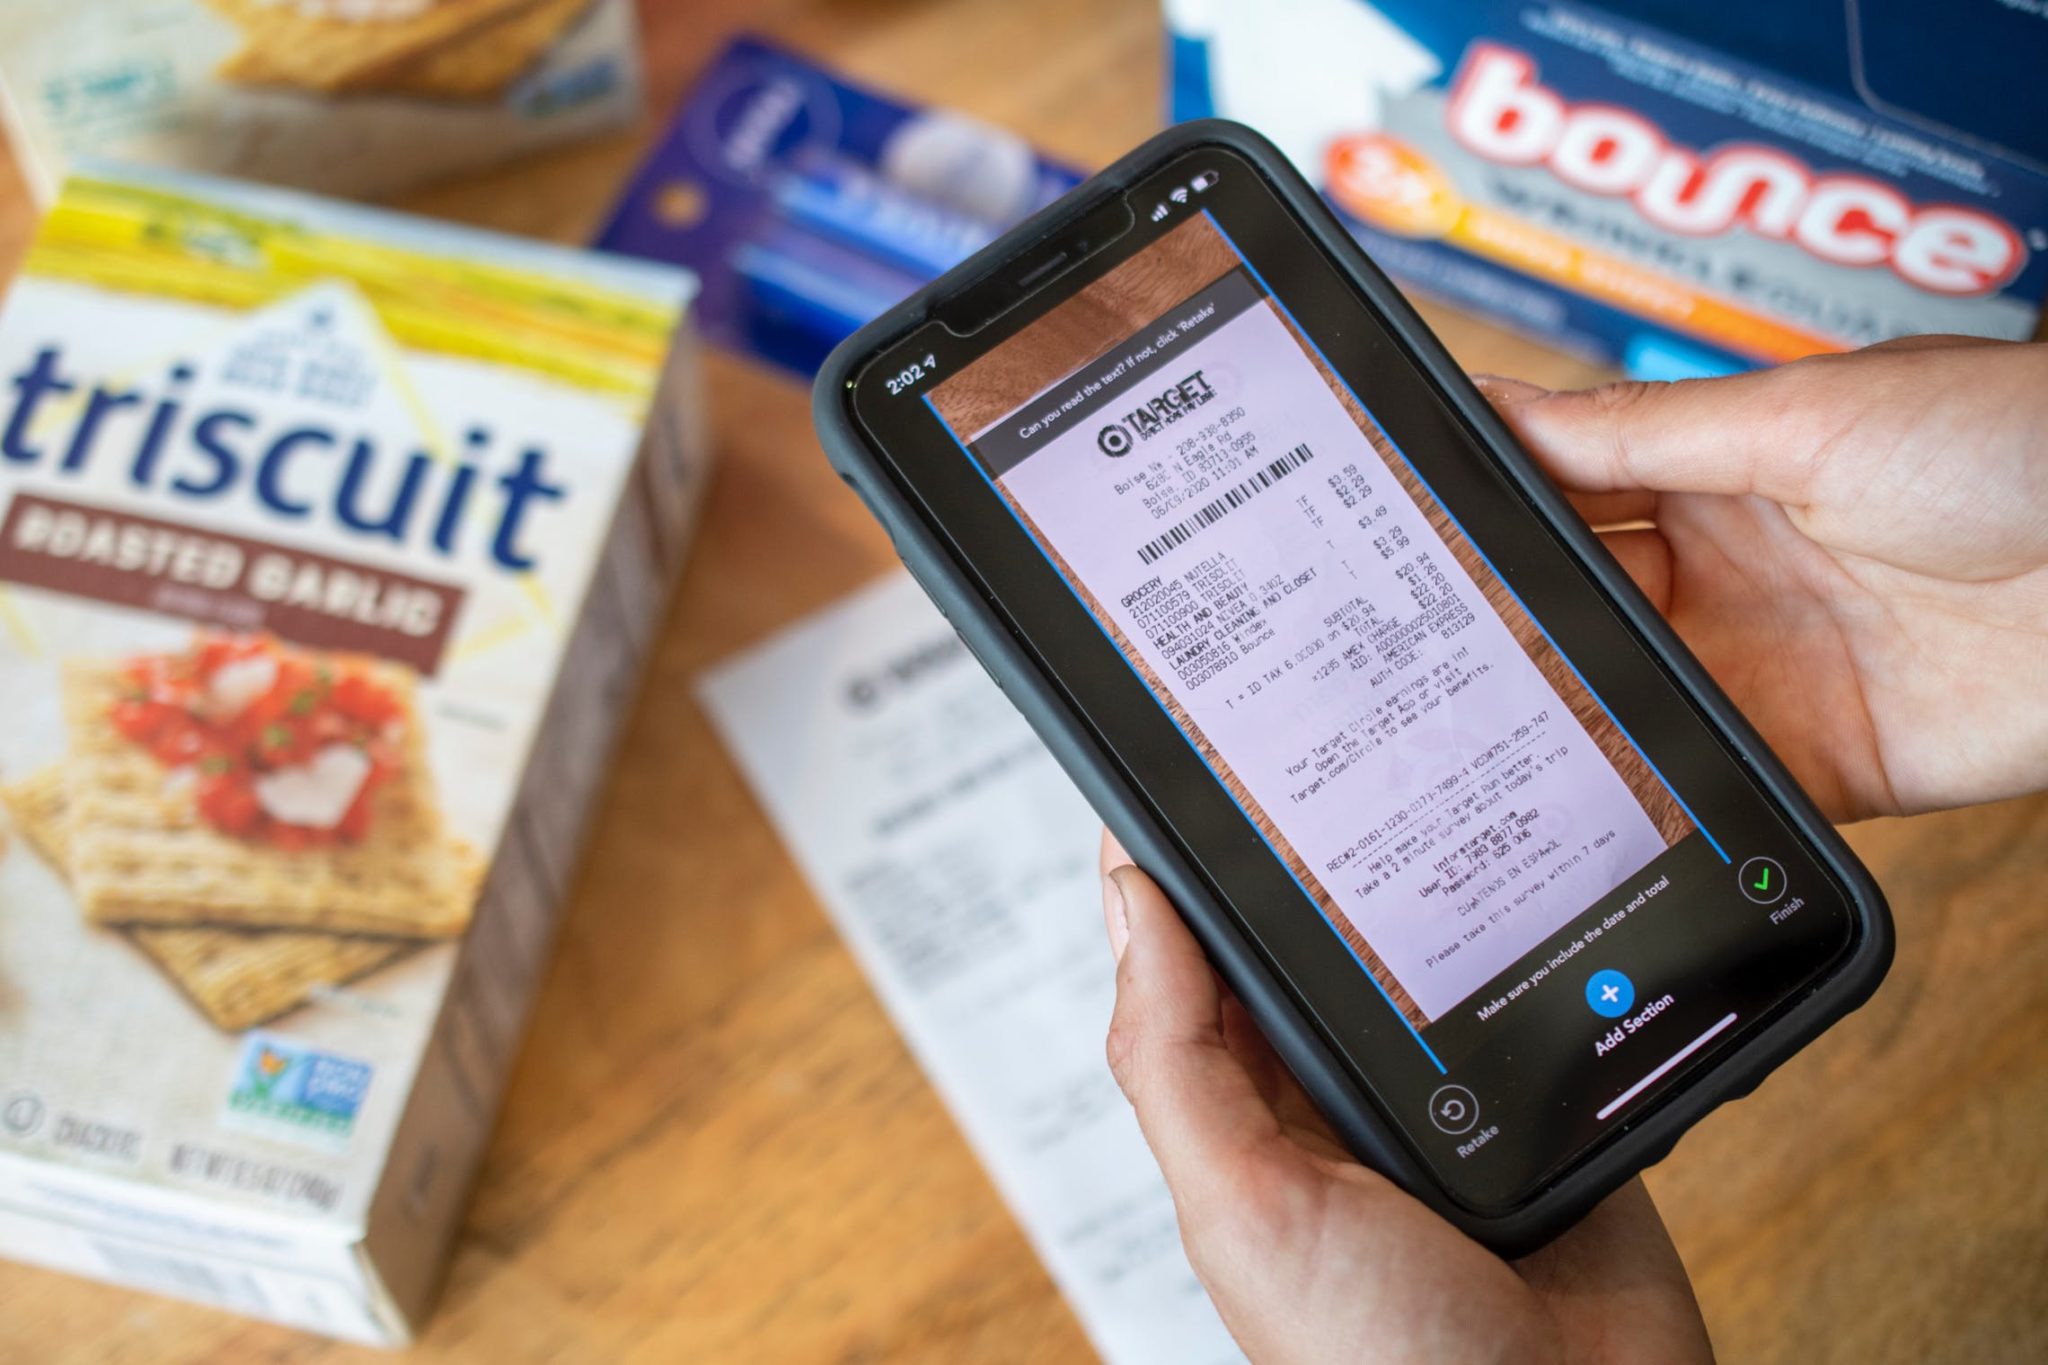 scan receipts app for money